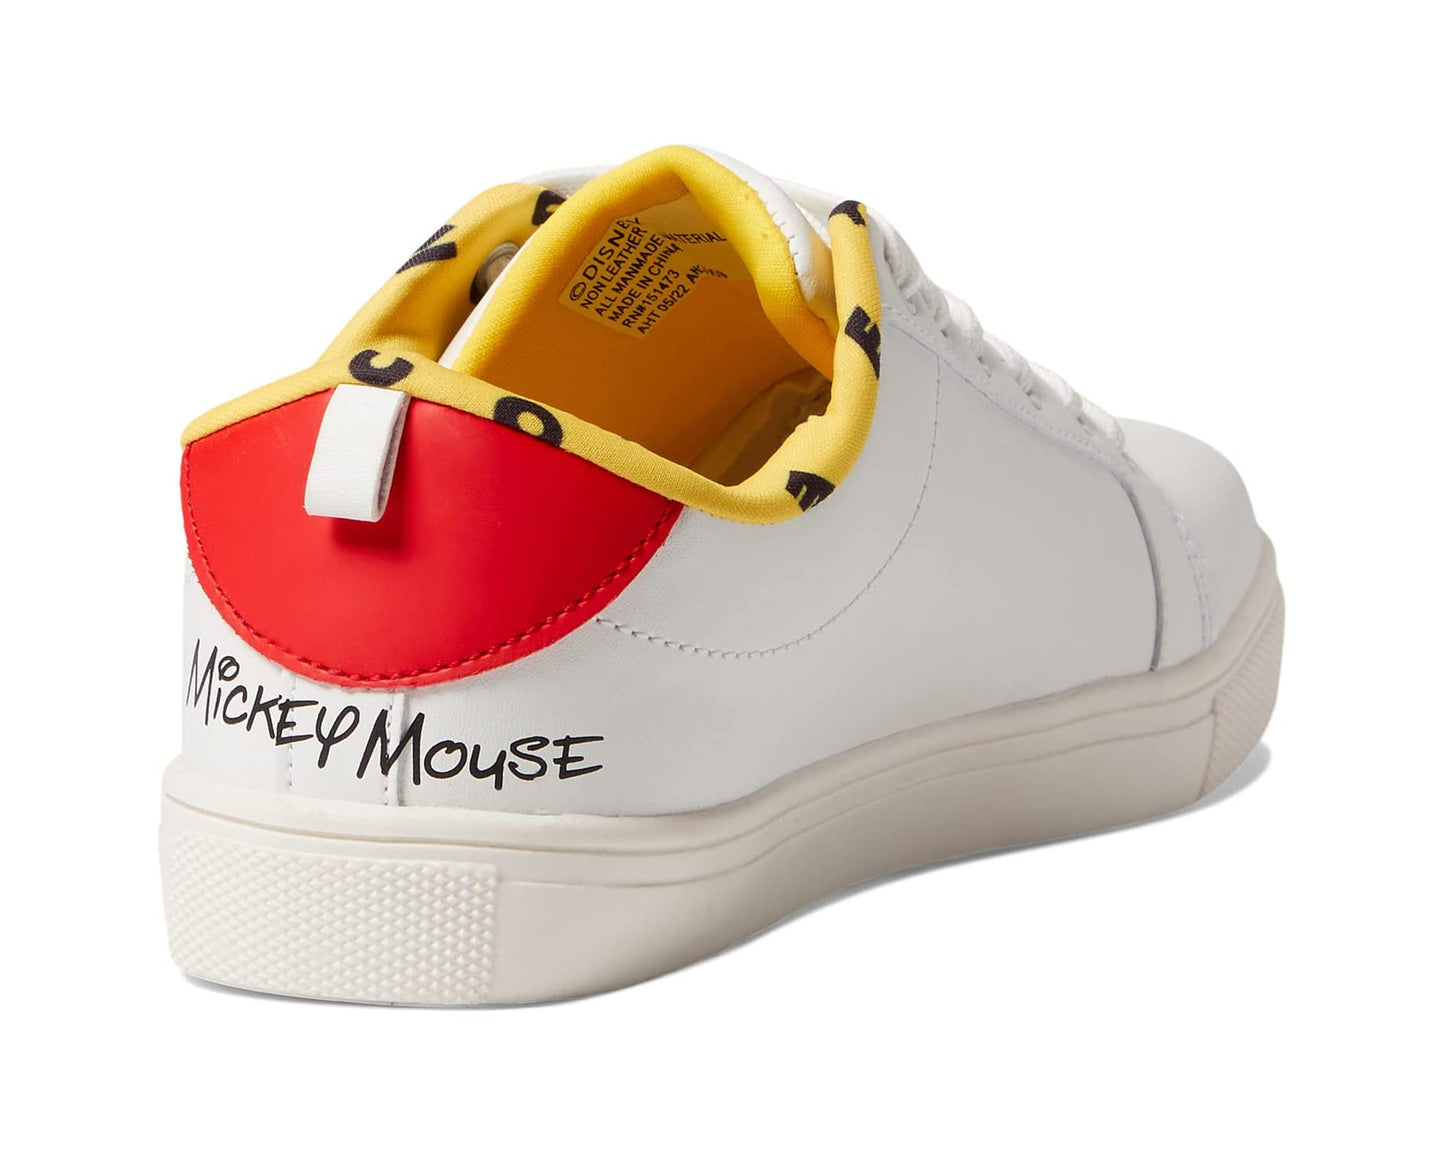 Mickey Low Top Sneaker